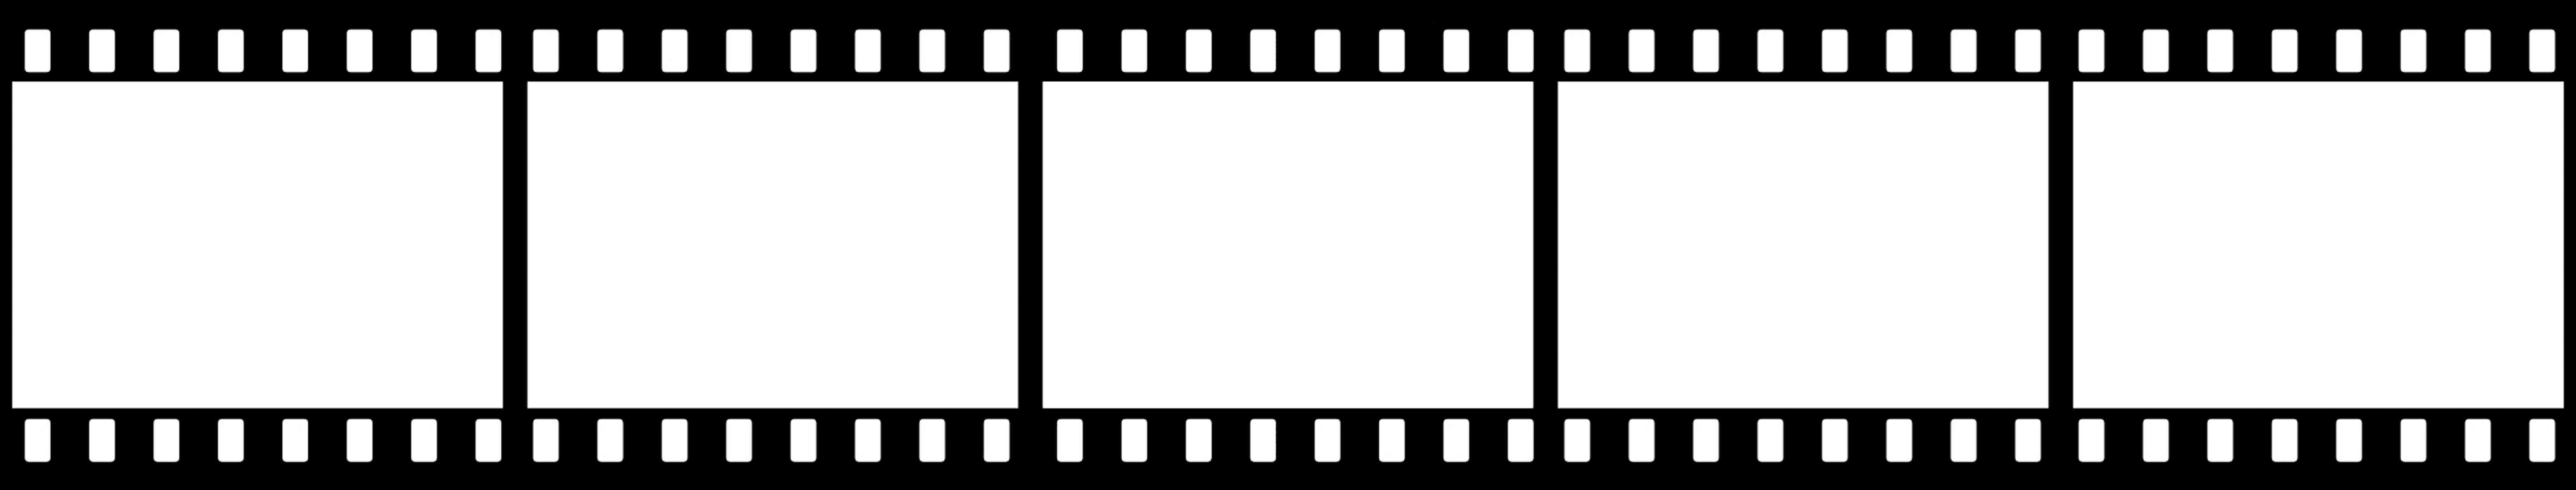 free-film-border-cliparts-download-free-film-border-cliparts-png